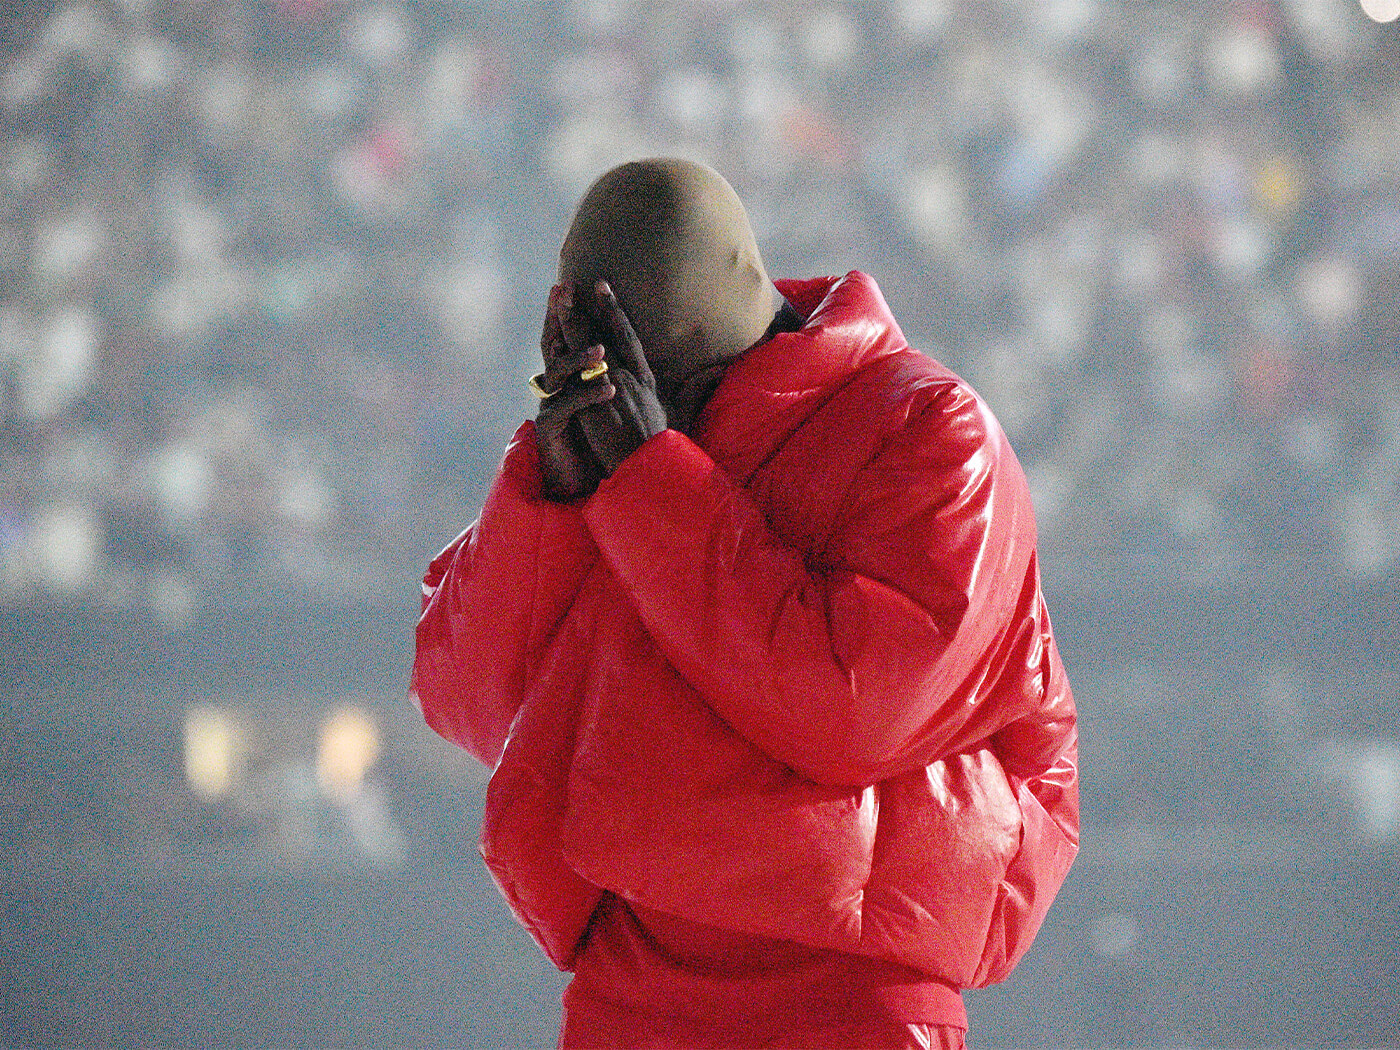 Kanye West at the Donda listenening event